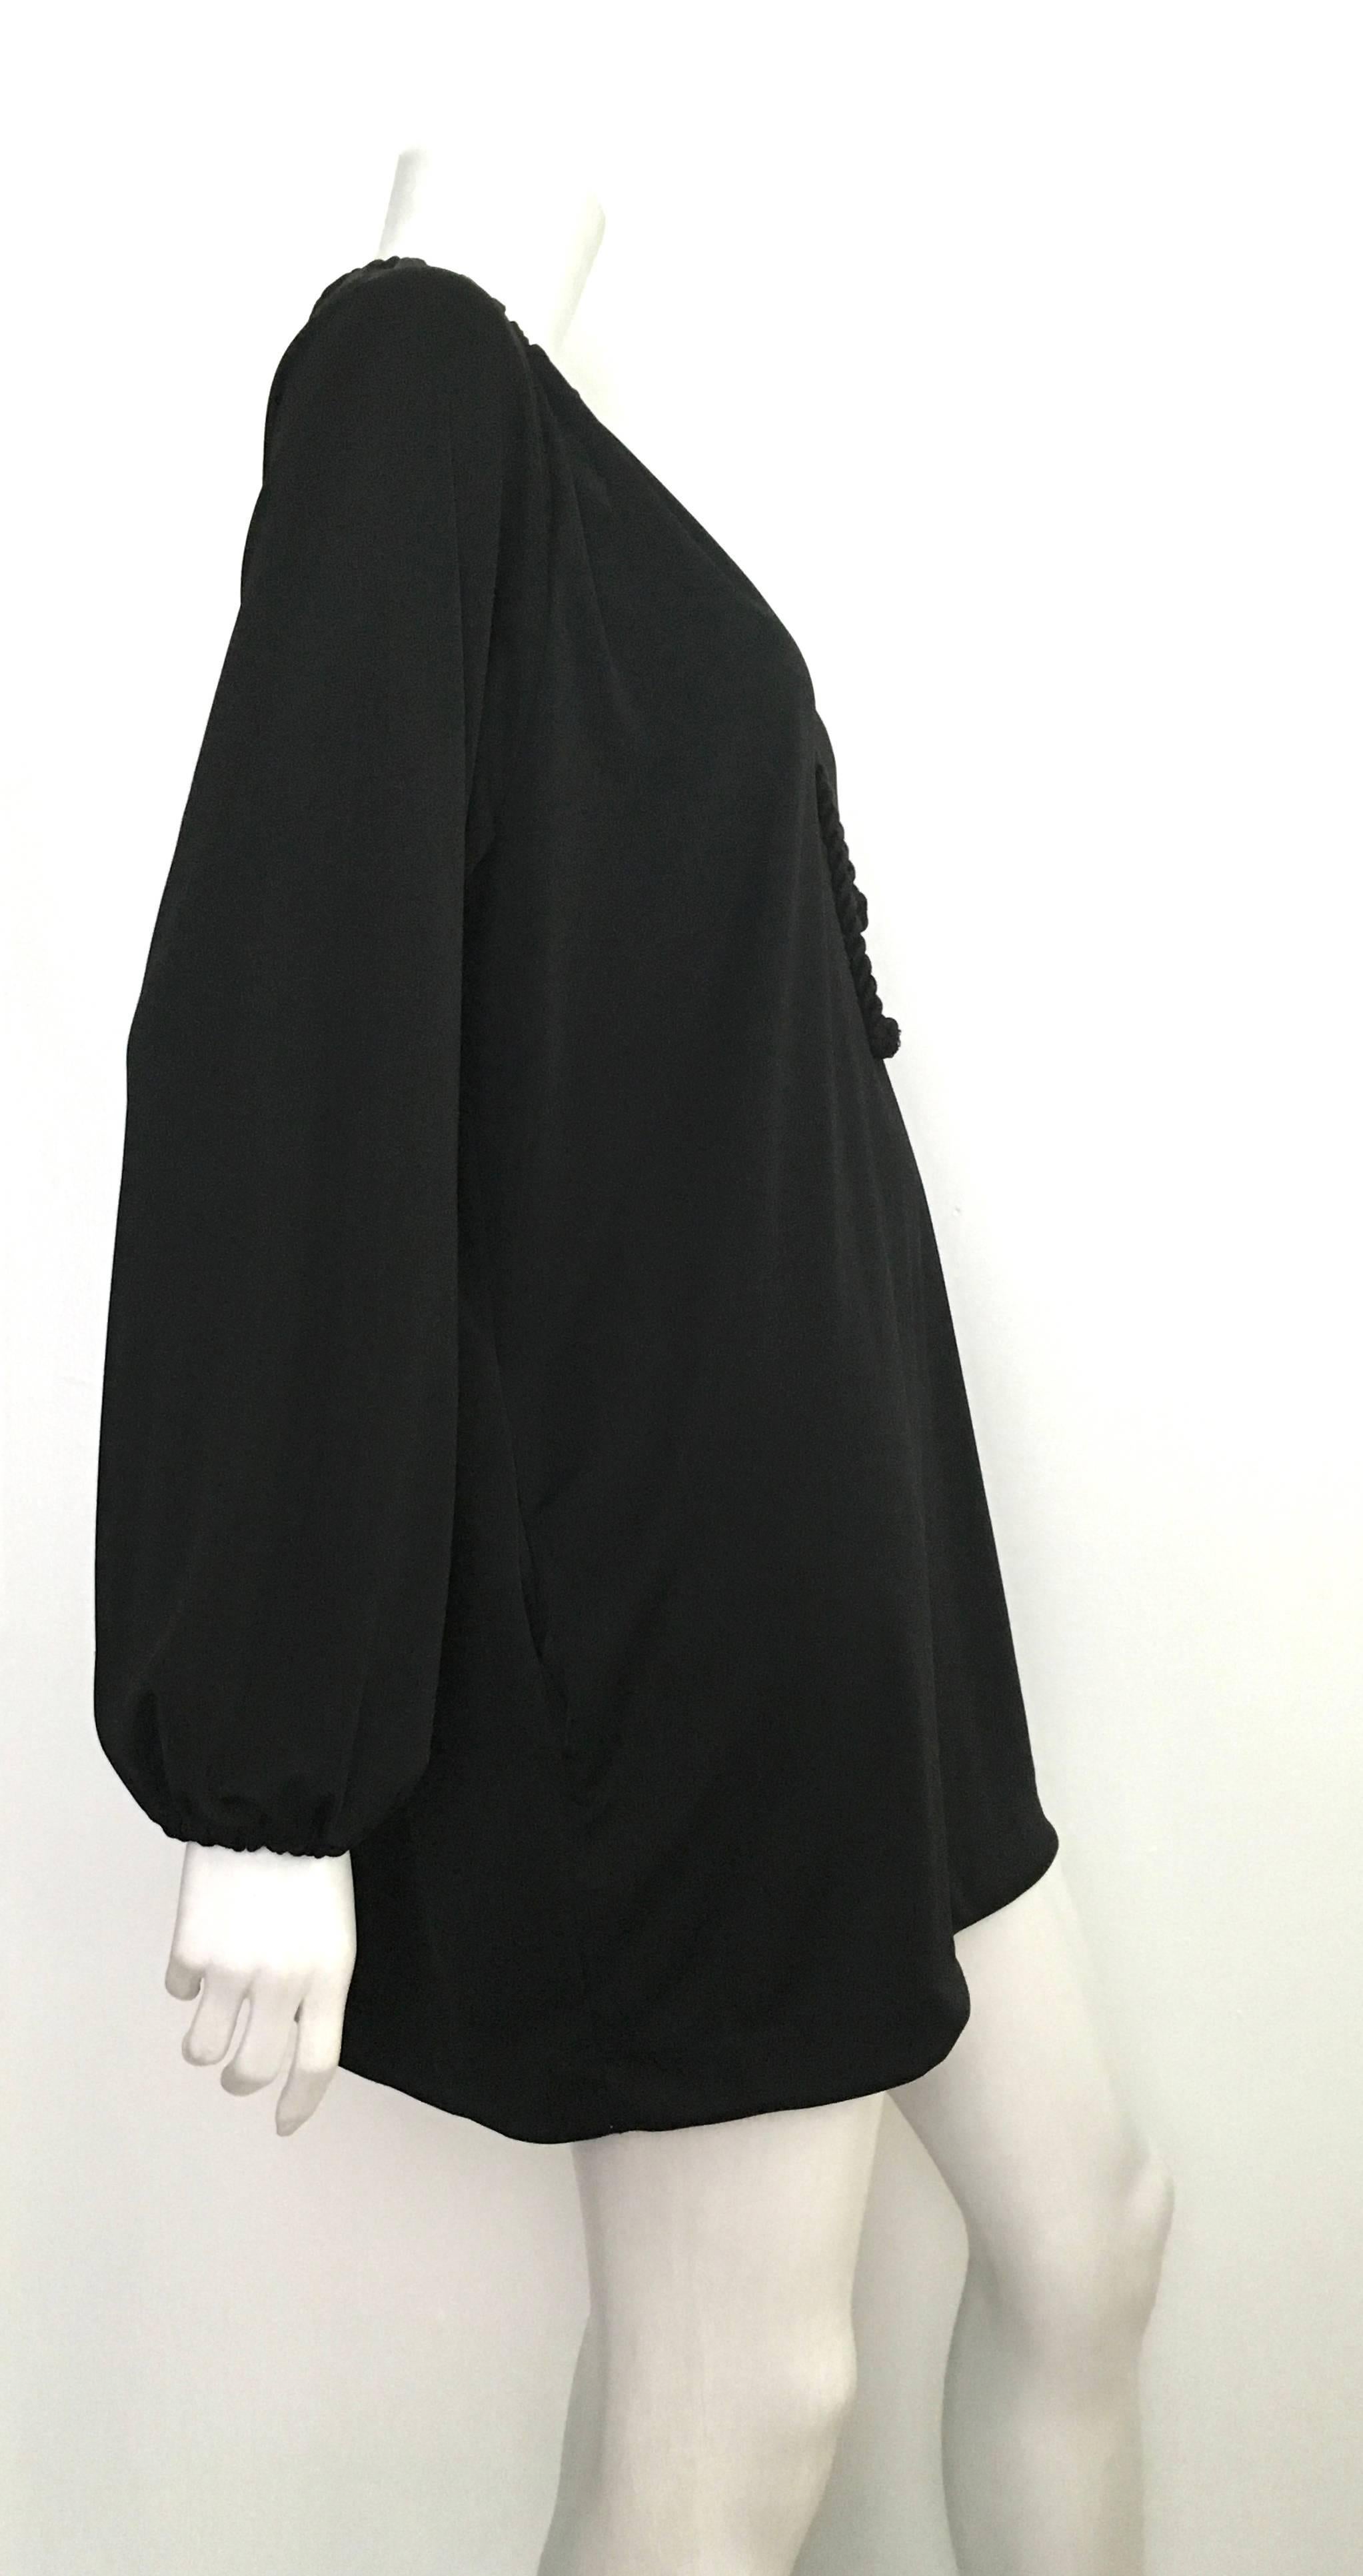 Geoffrey Beene 1970s Black Mini Dress Size Small. For Sale 1